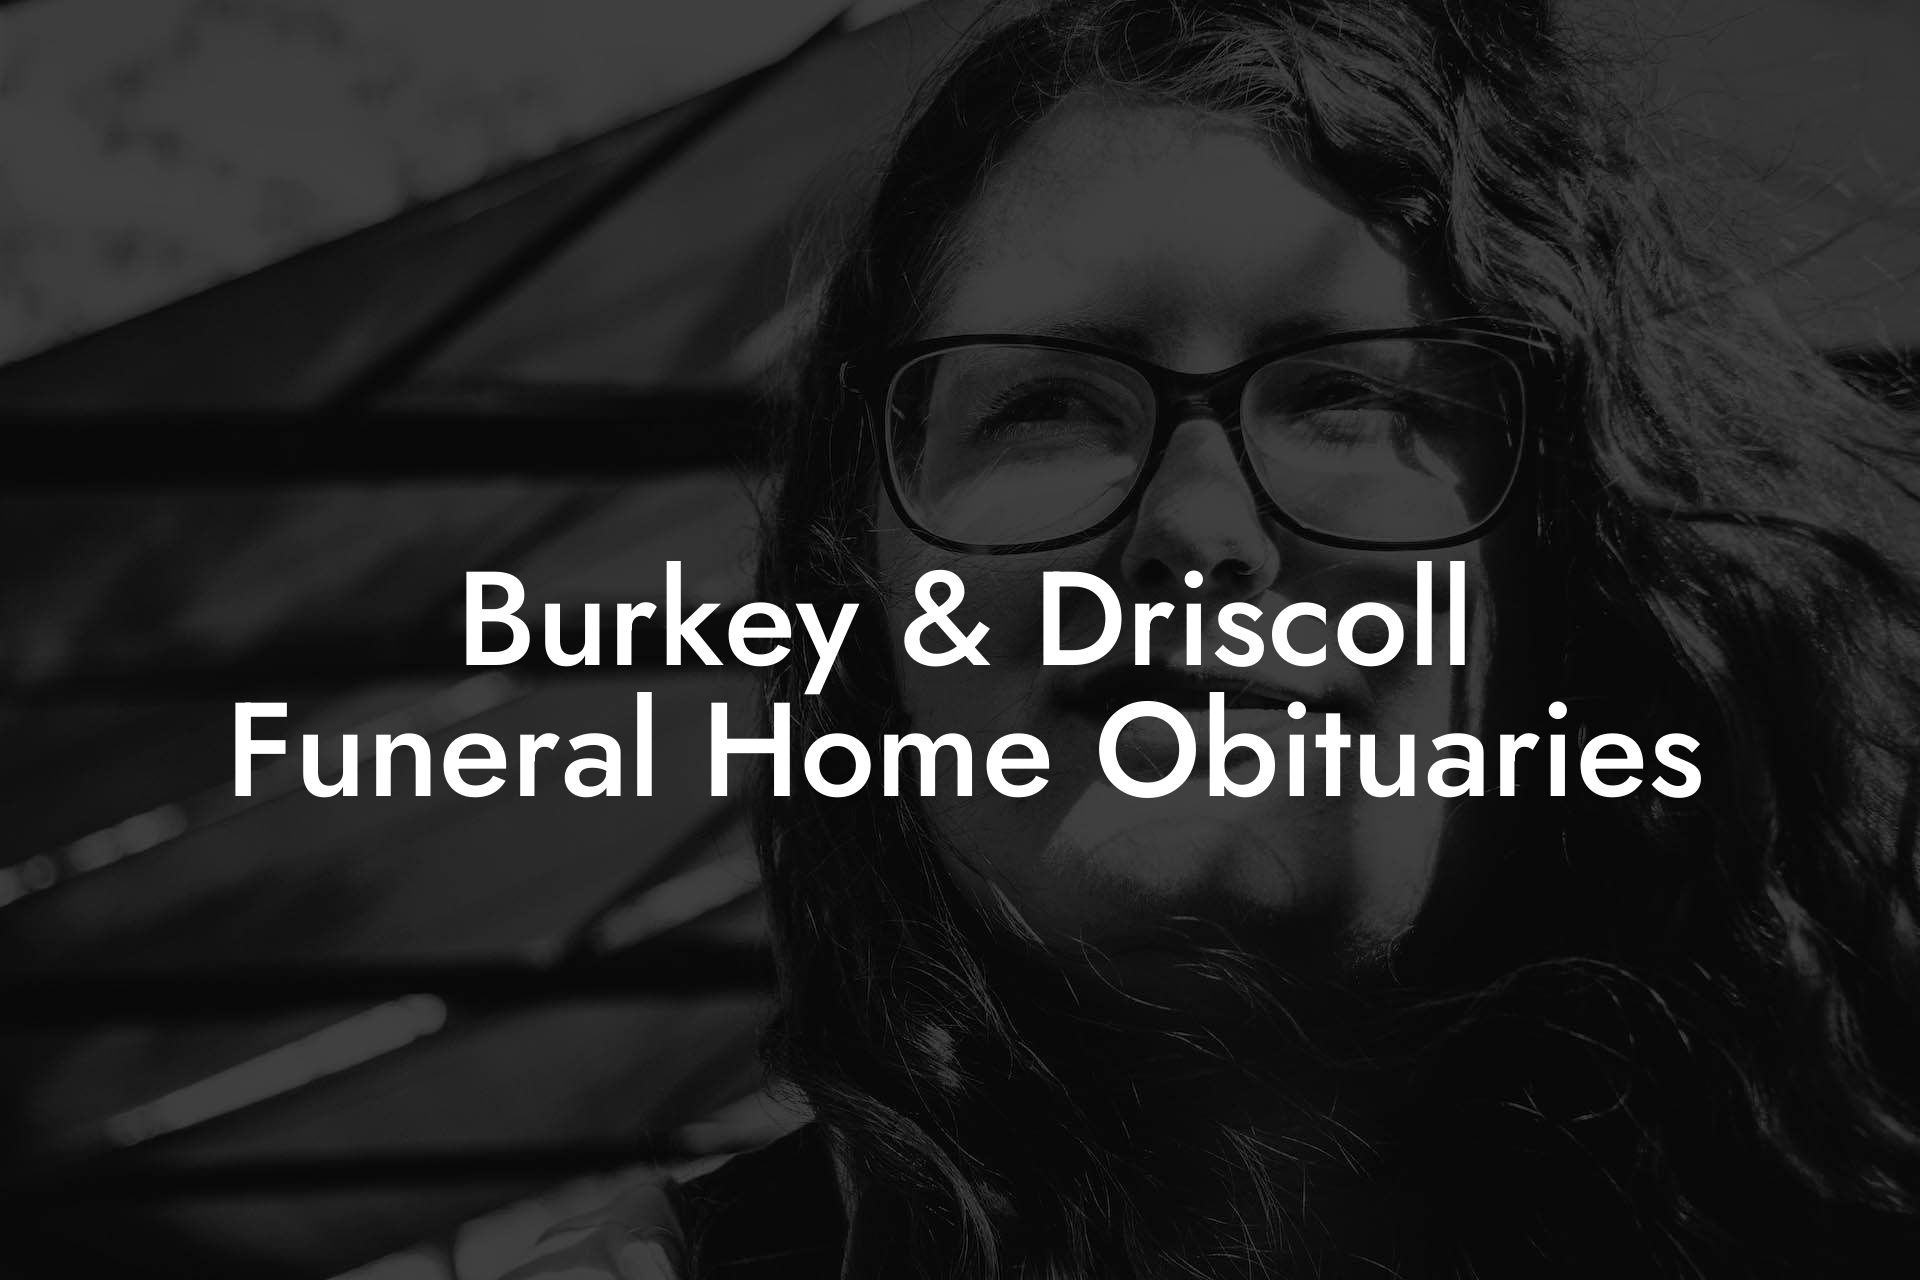 Burkey & Driscoll Funeral Home Obituaries